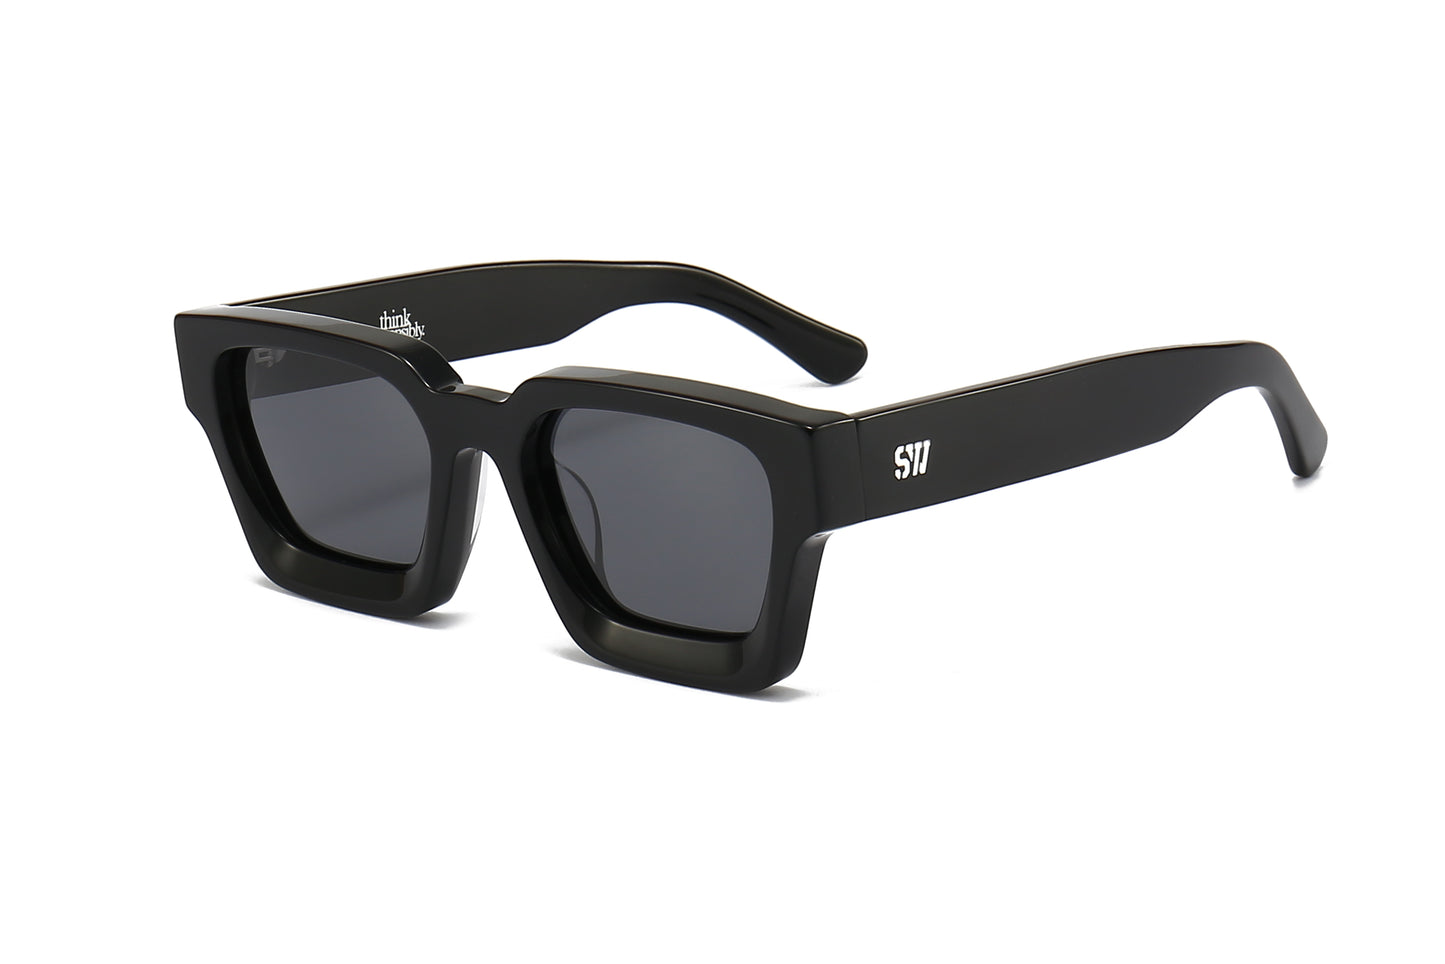 off-white sunglasses black